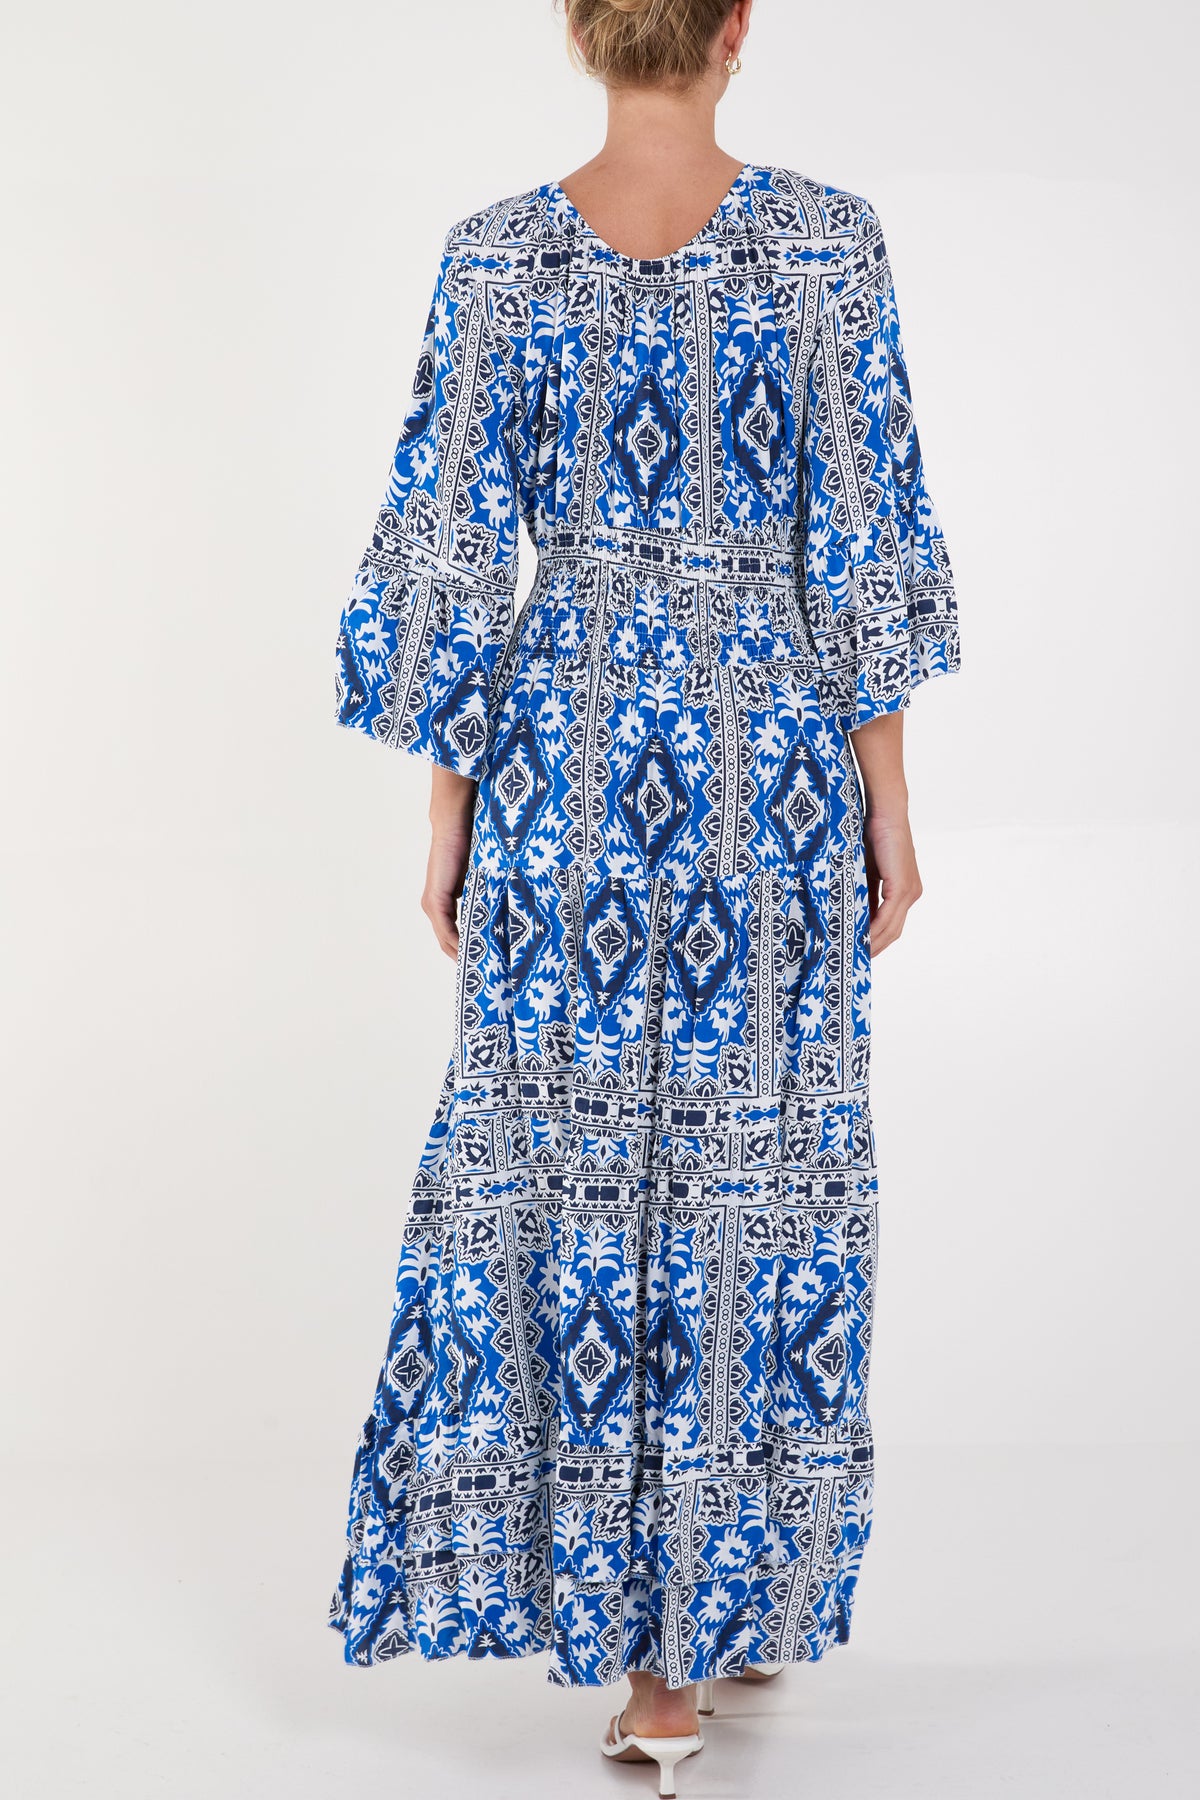 Tile Print Shirred Bodice Maxi Dress